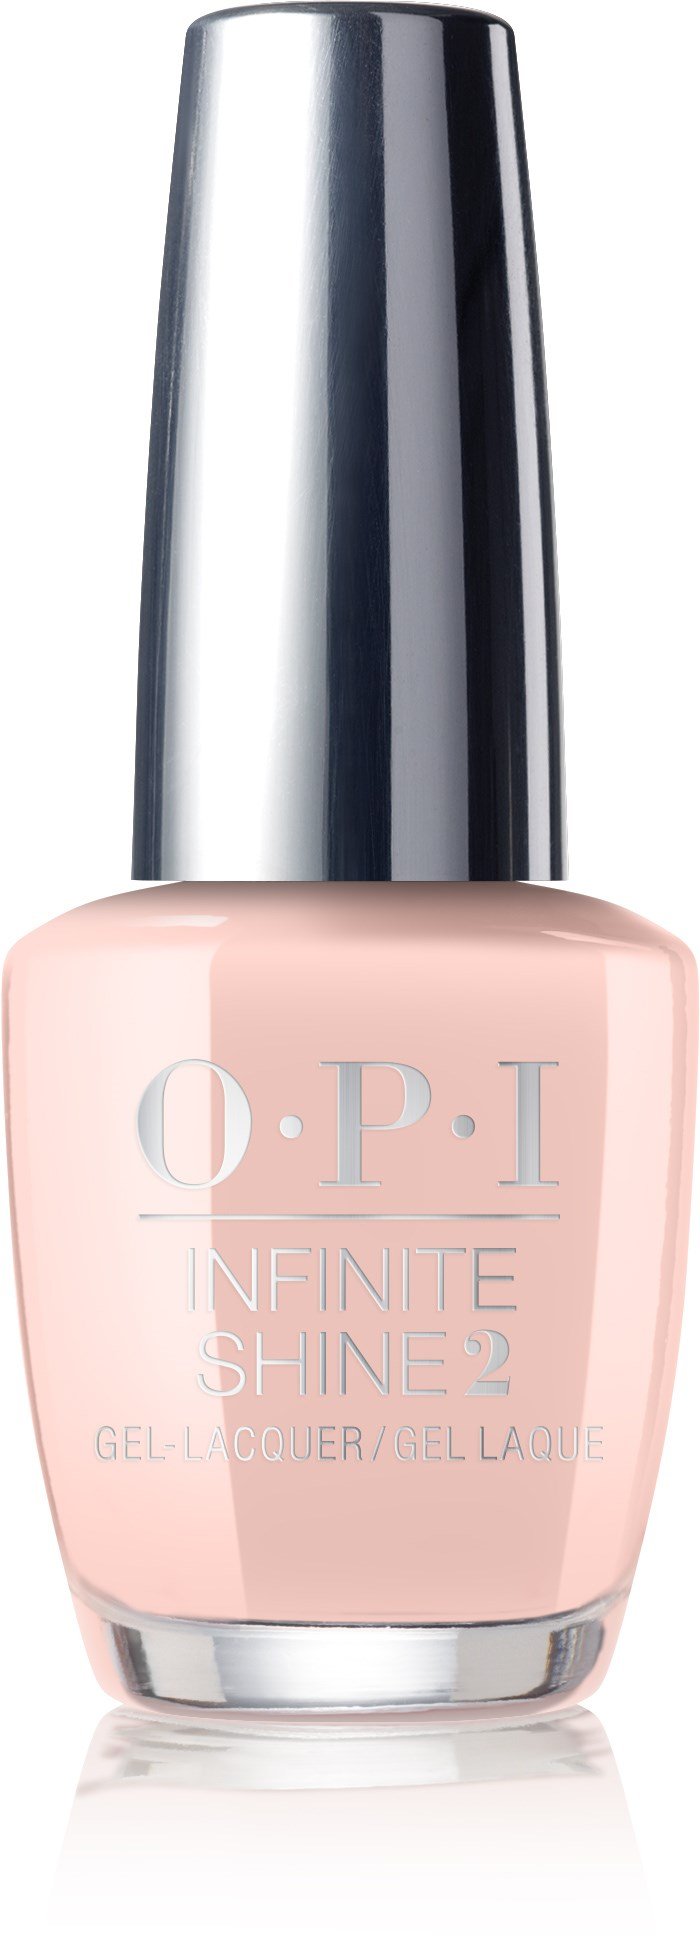 OPI Infinite Shine - Bubble Bath